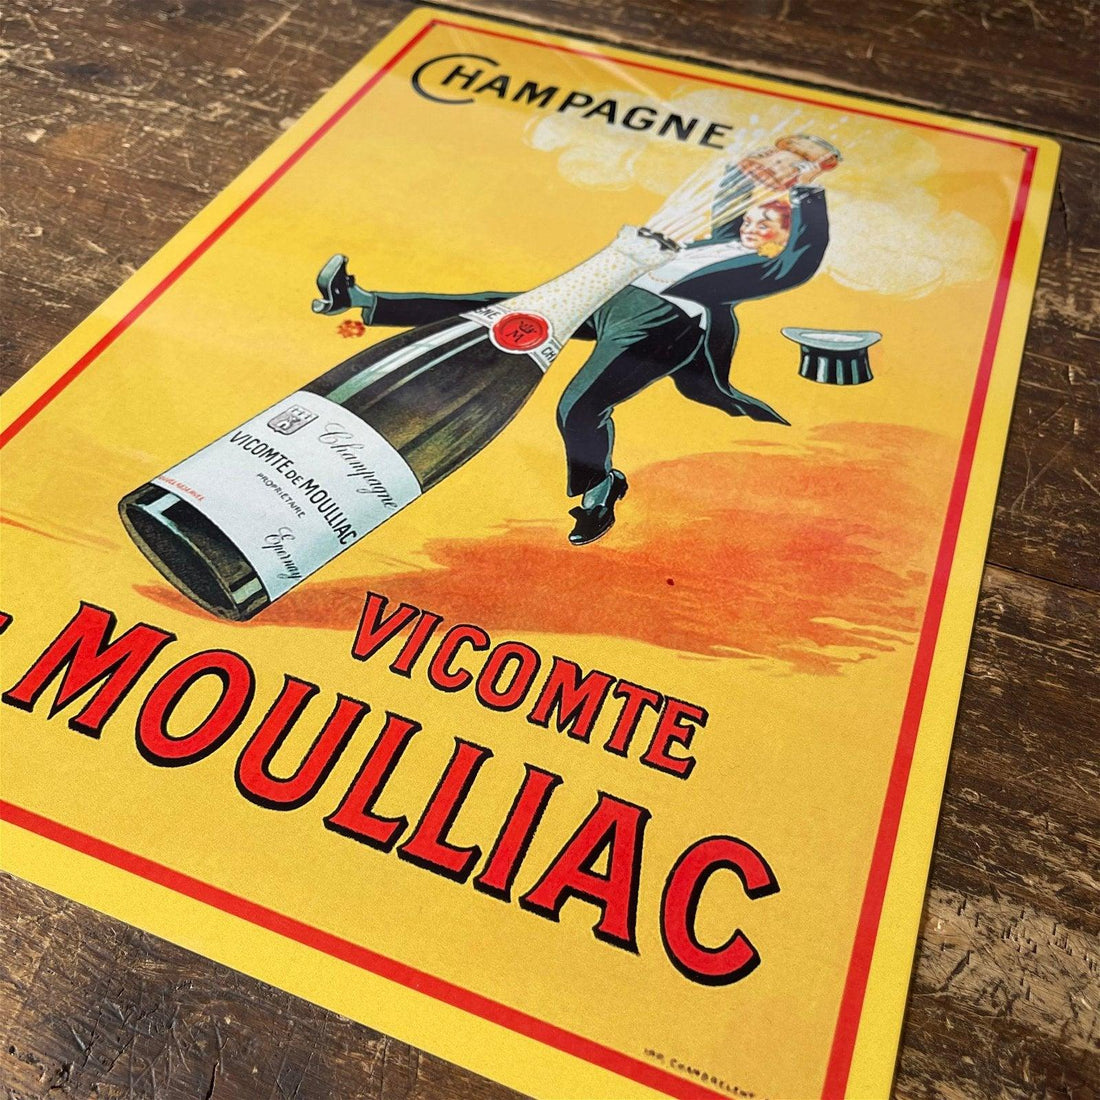 Vintage Metal Sign - Retro Advertising Champagne Vicomte De Moulliac Sign - £27.99 - Metal Sign 